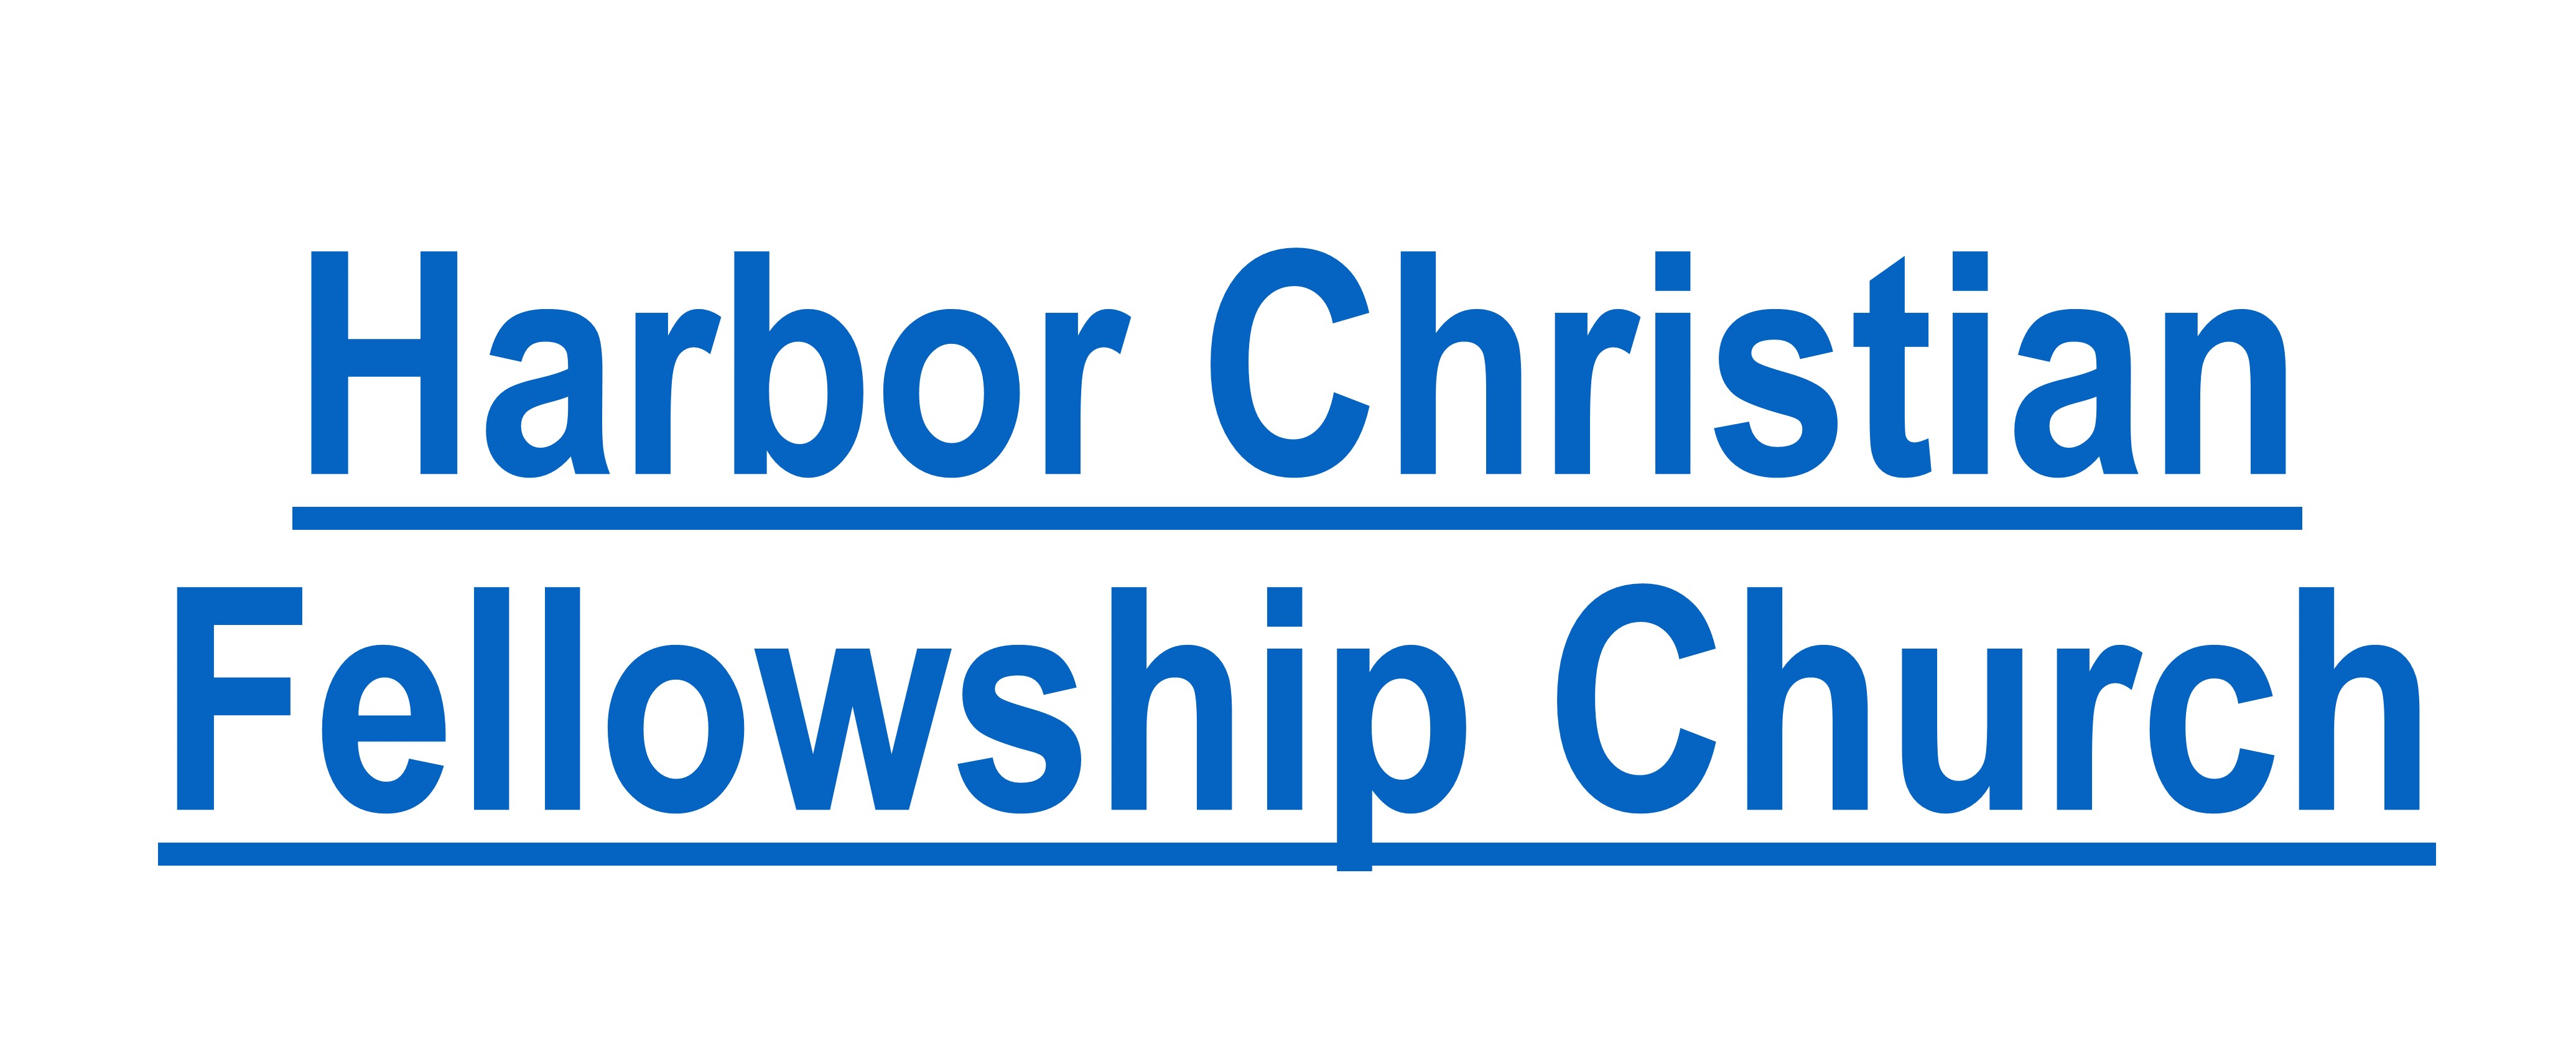  Harbor Christian Fellowship Church